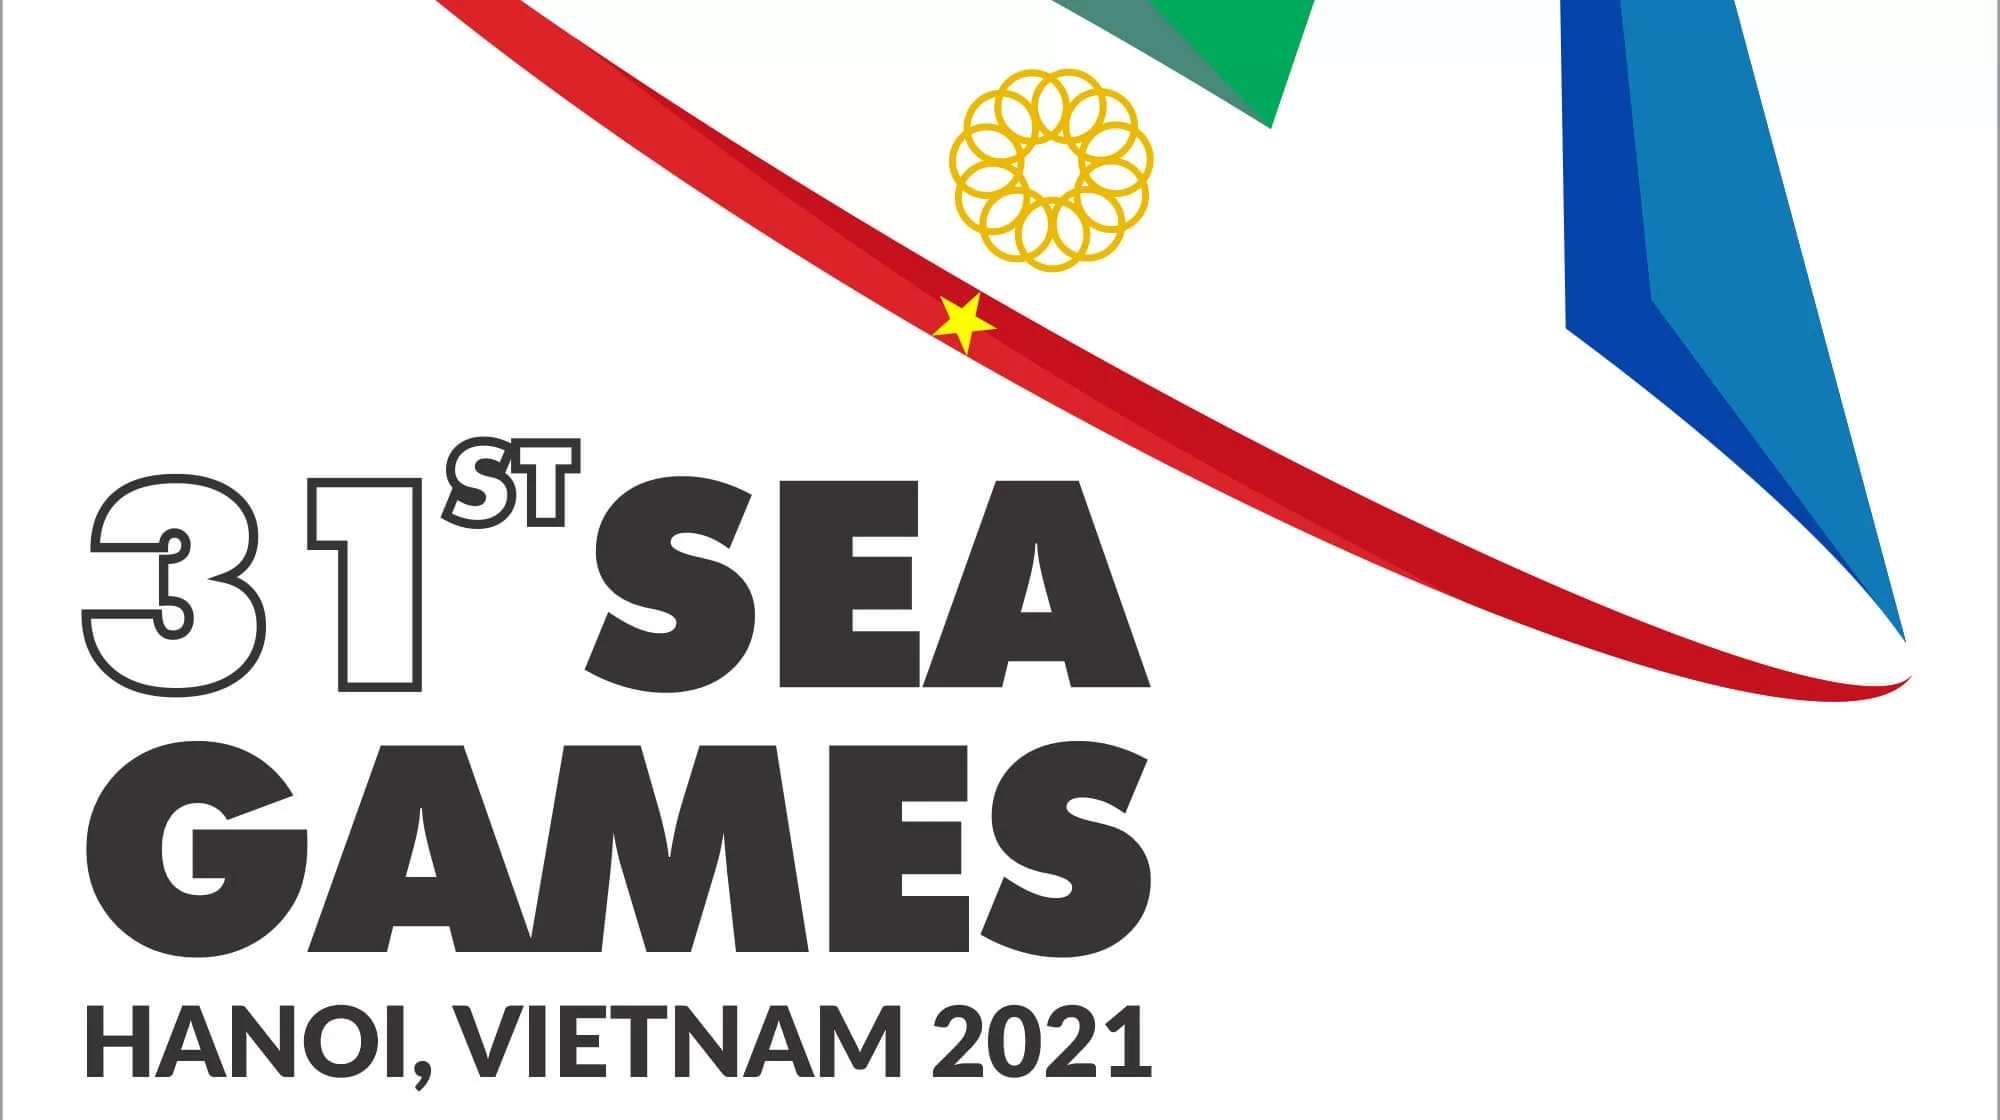 SEA Games 2021 Hanoi, Vietnam. (NOC Vietnam)